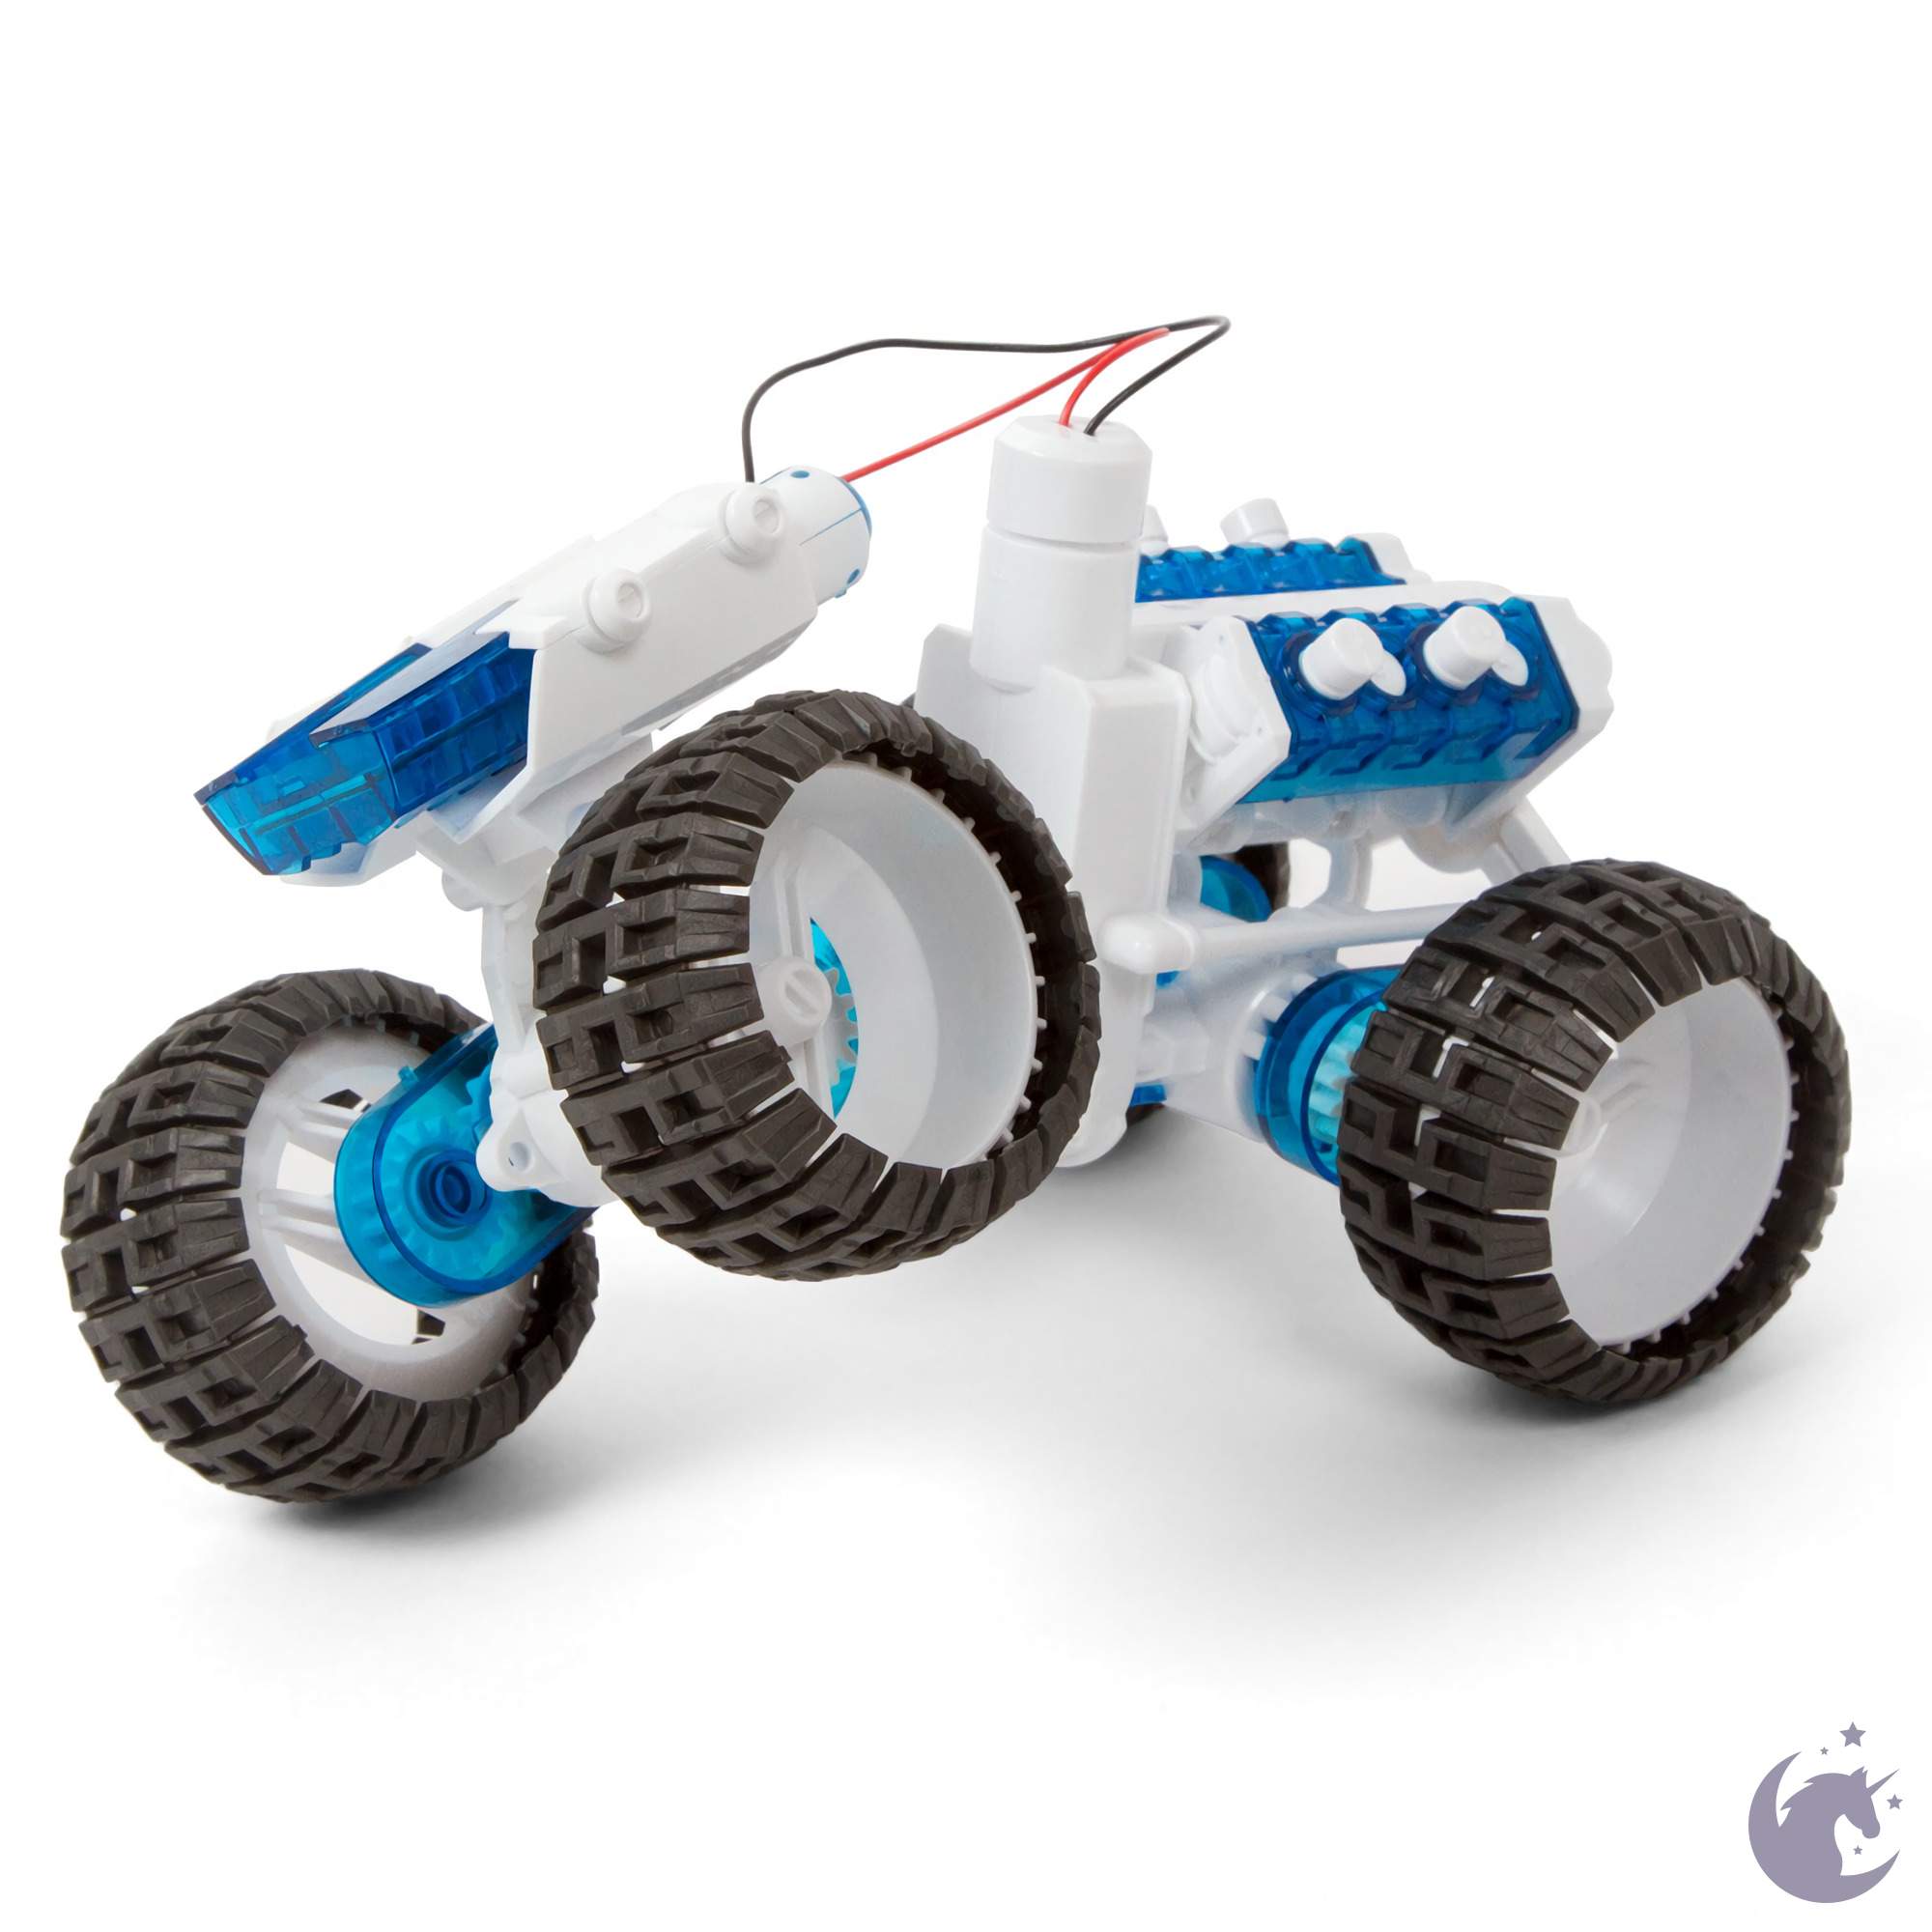 unicorntoys cic kits salt water fuel cell engine car educational robot kit engineering stem toys for kids CIC21-752